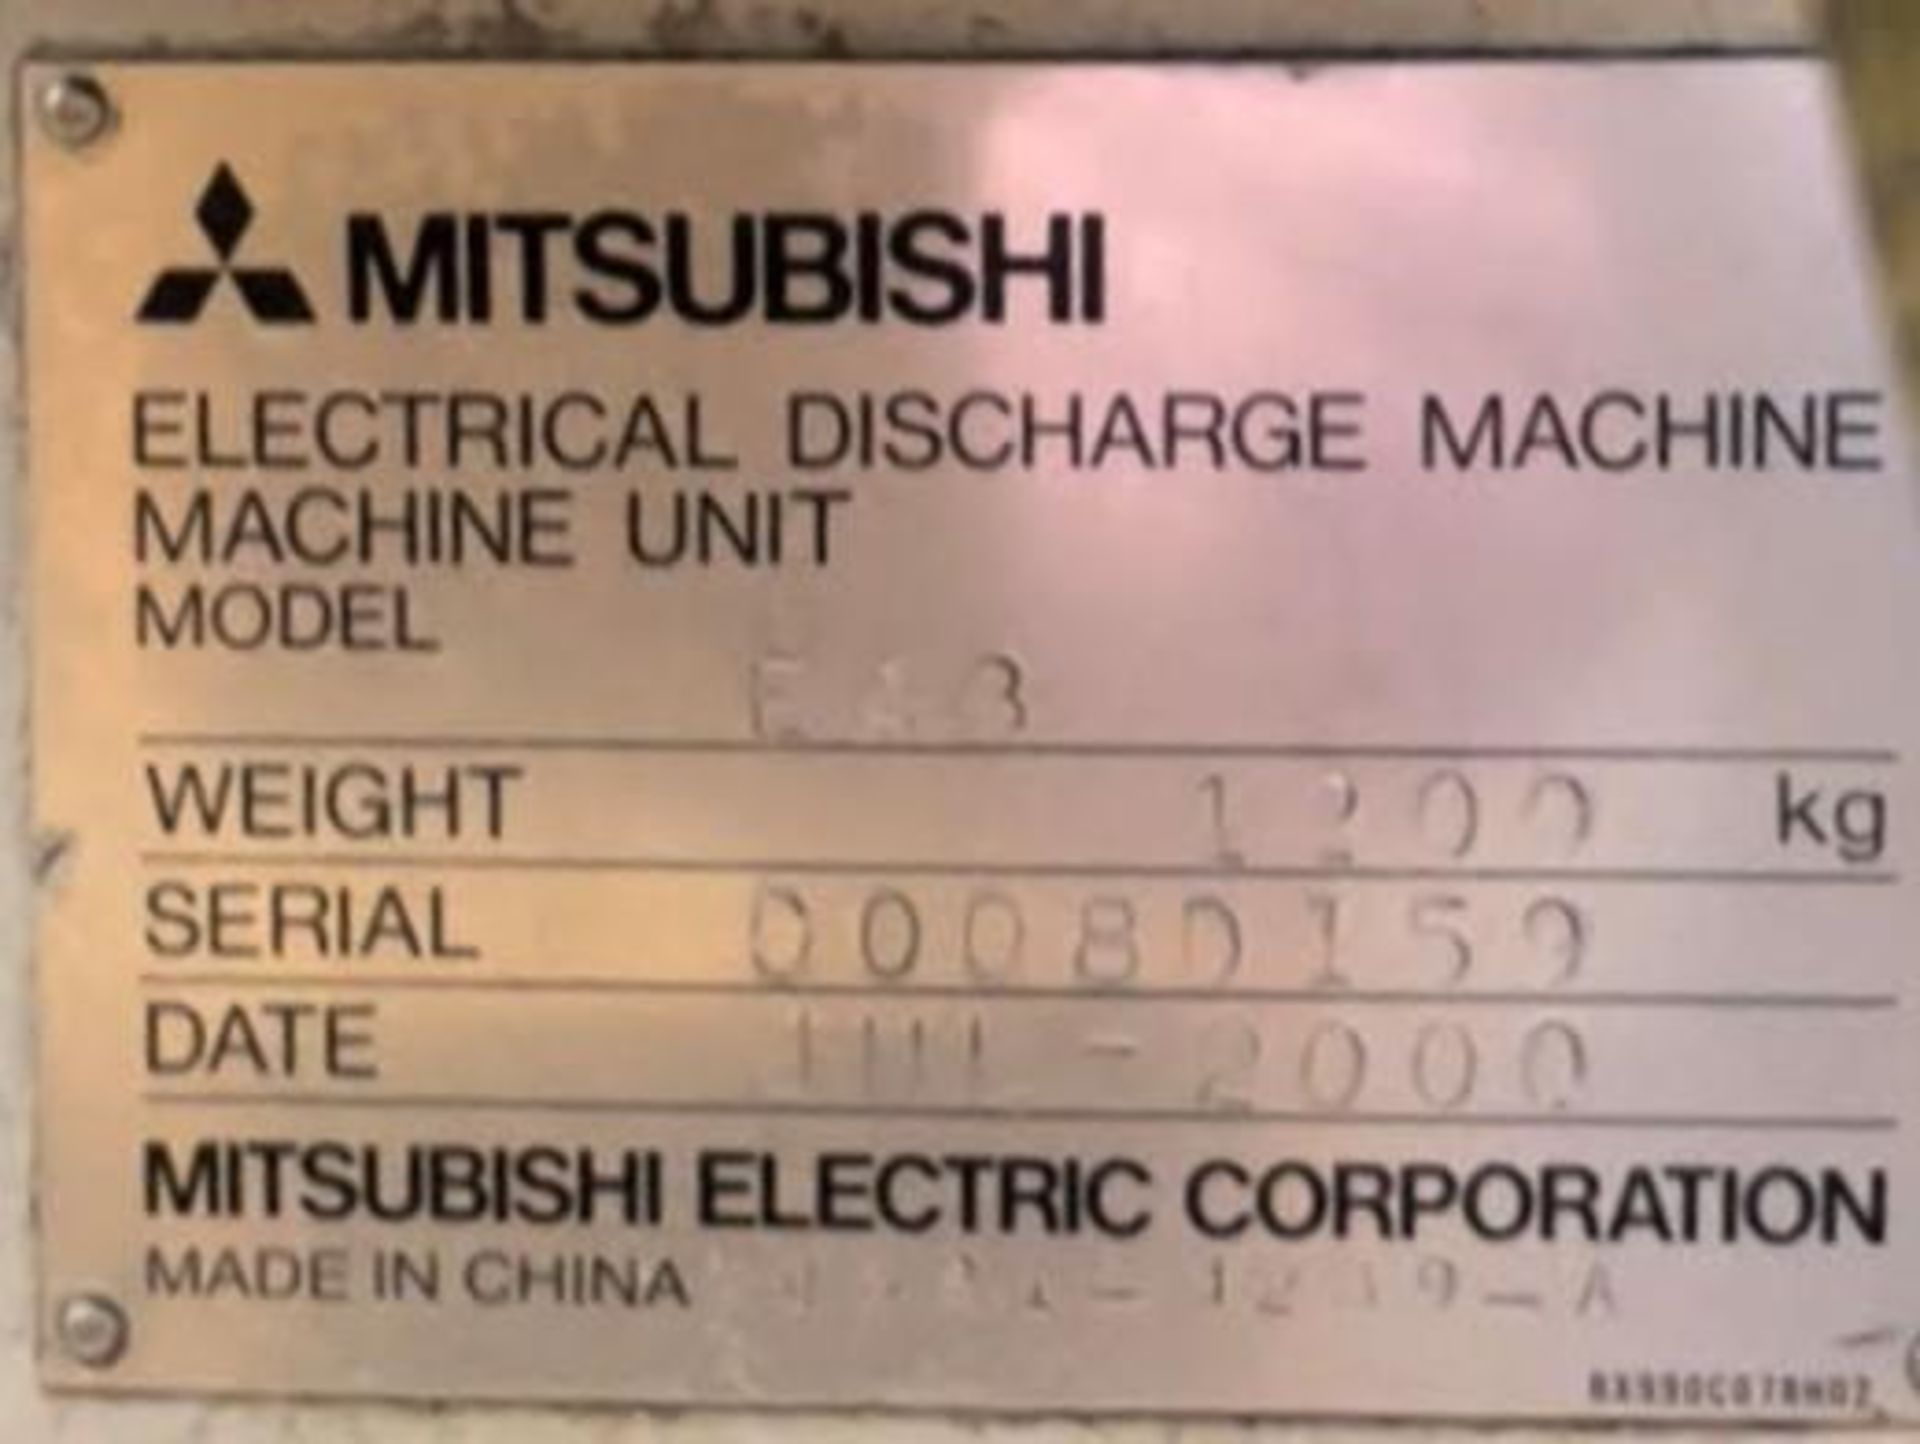 Mitsubishi EA8 CNC Sinker EDM, C-Axis & ATC, s/n 0008D159, 2000 - Image 6 of 6